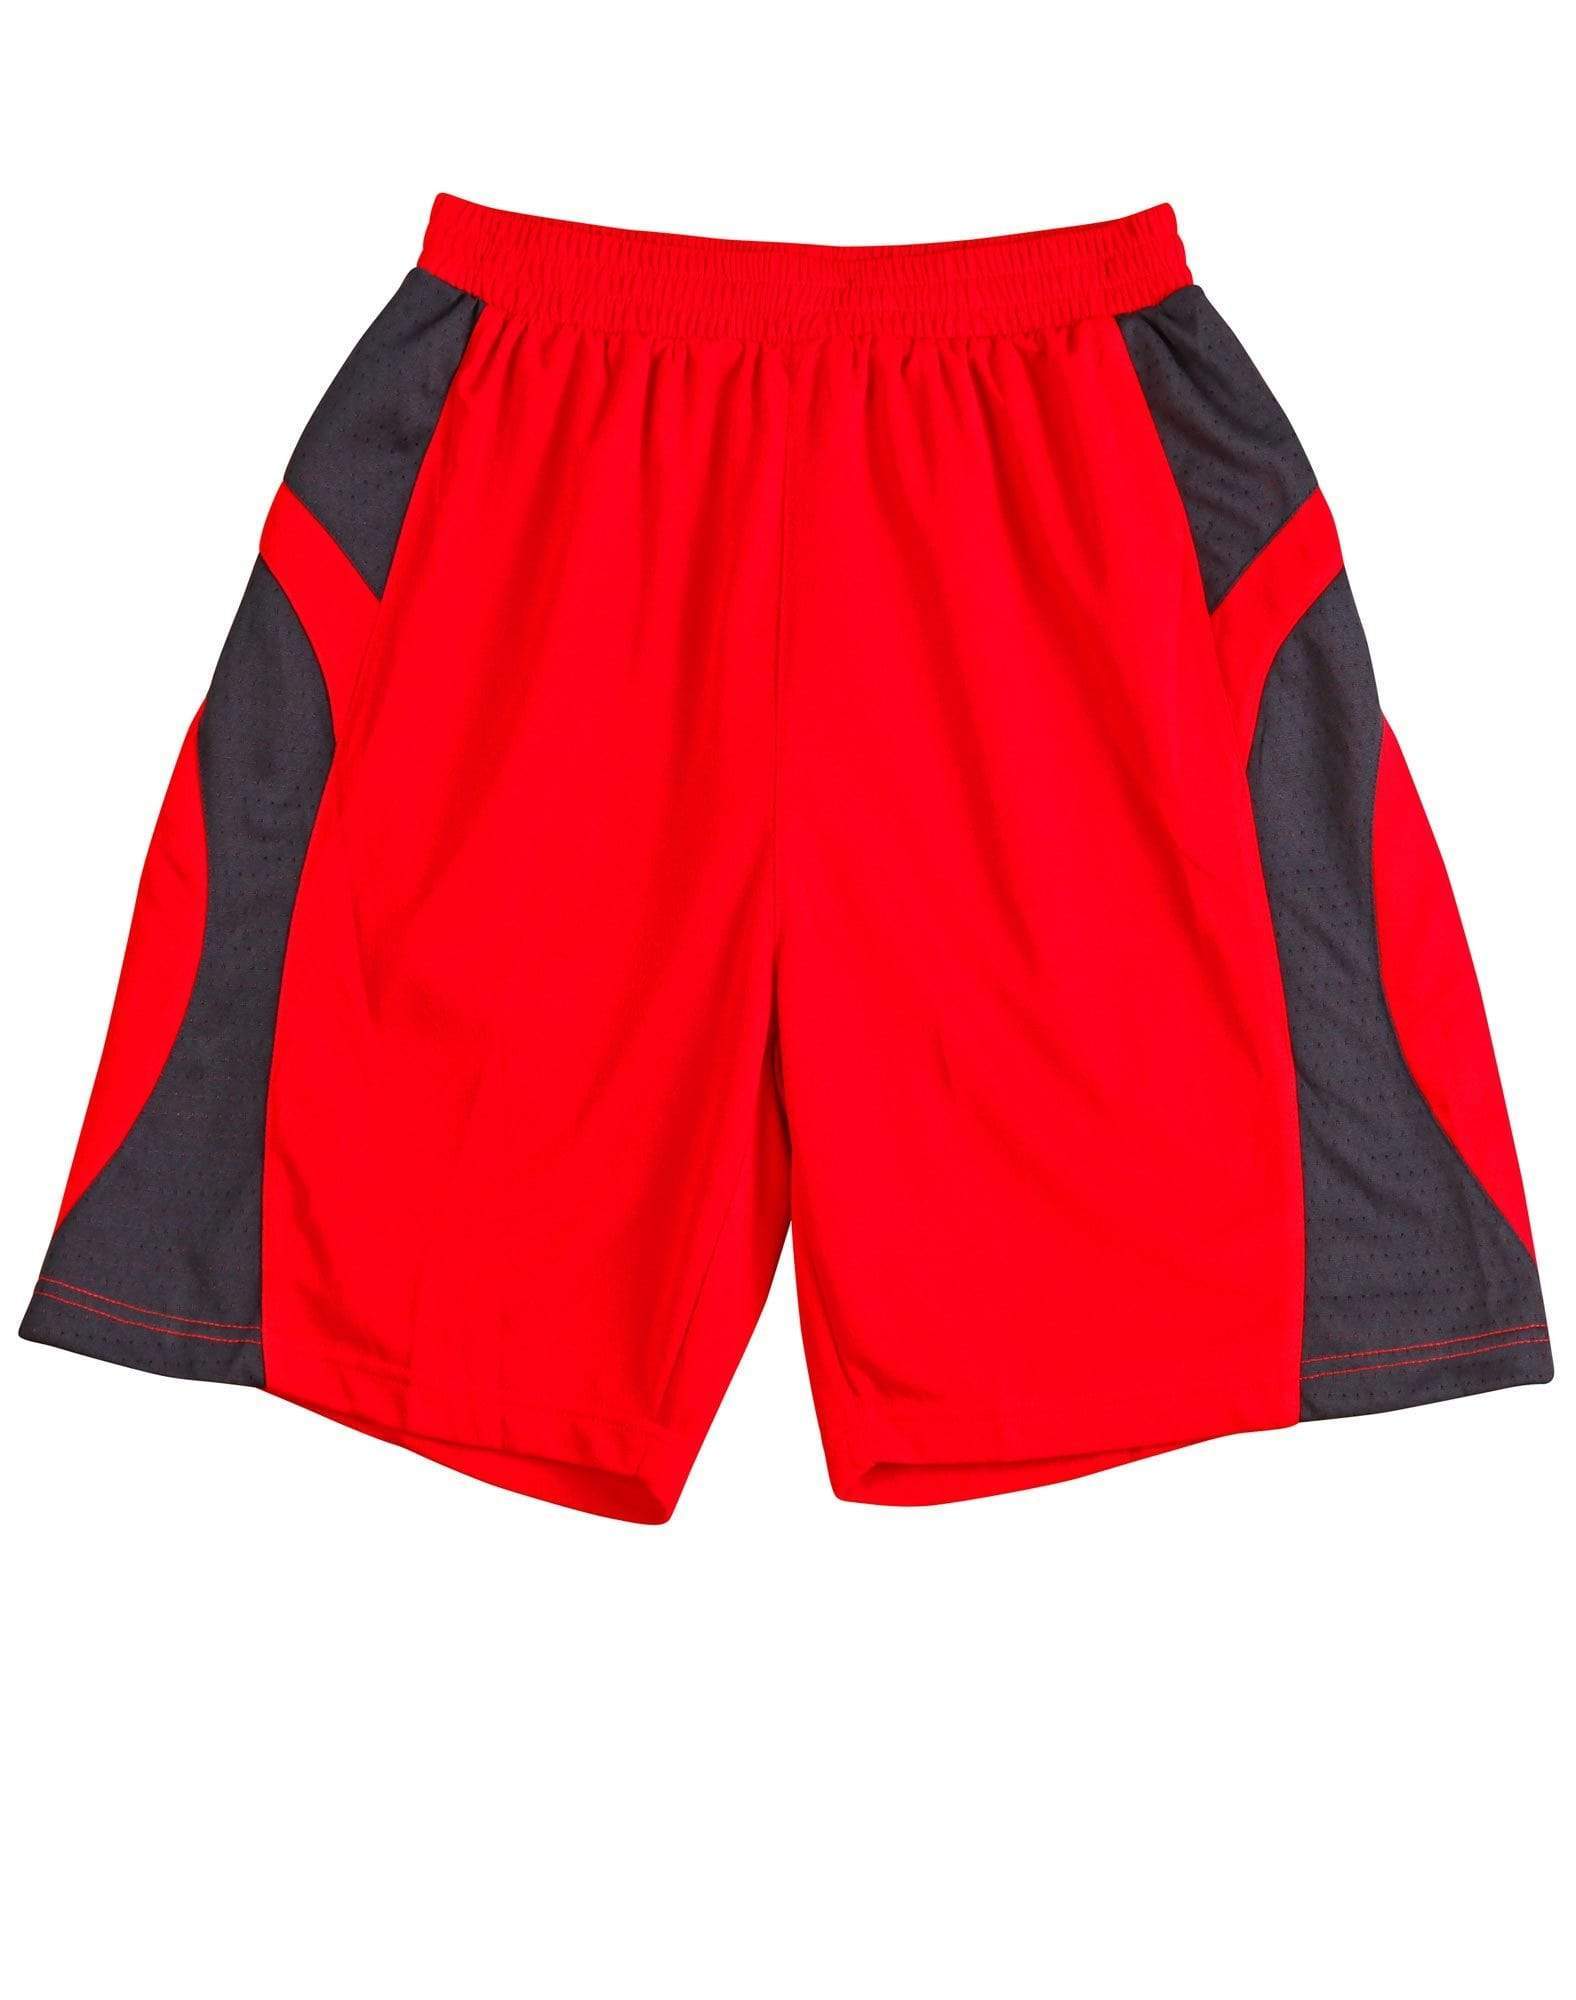 Slamdunk Shorts Adult Ss23 Active Wear Winning Spirit Black/Red S 